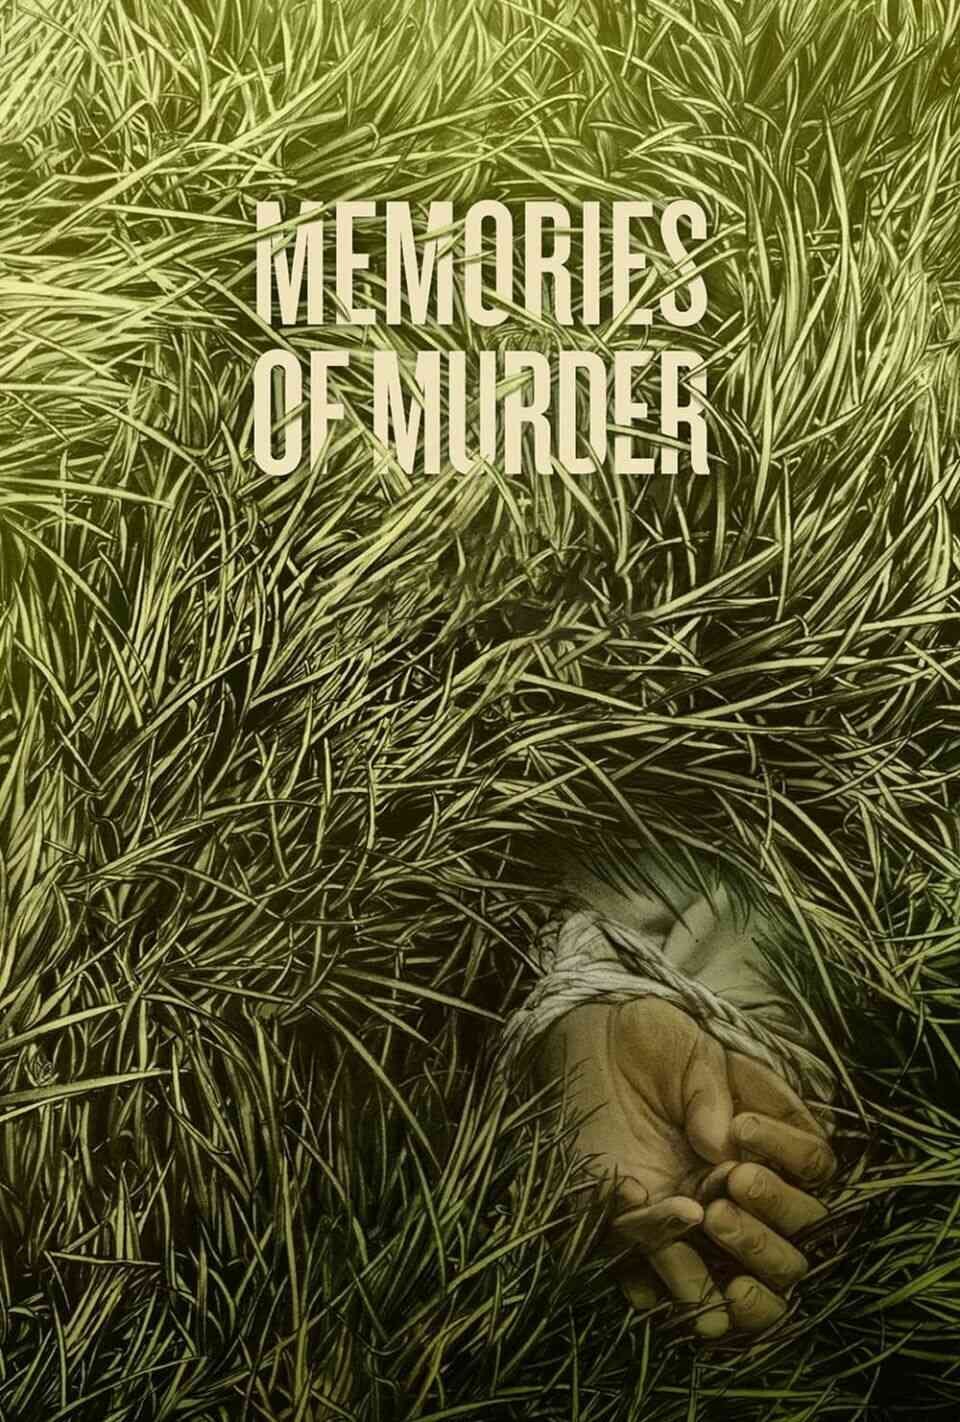 Read Memories of Murder screenplay (poster)